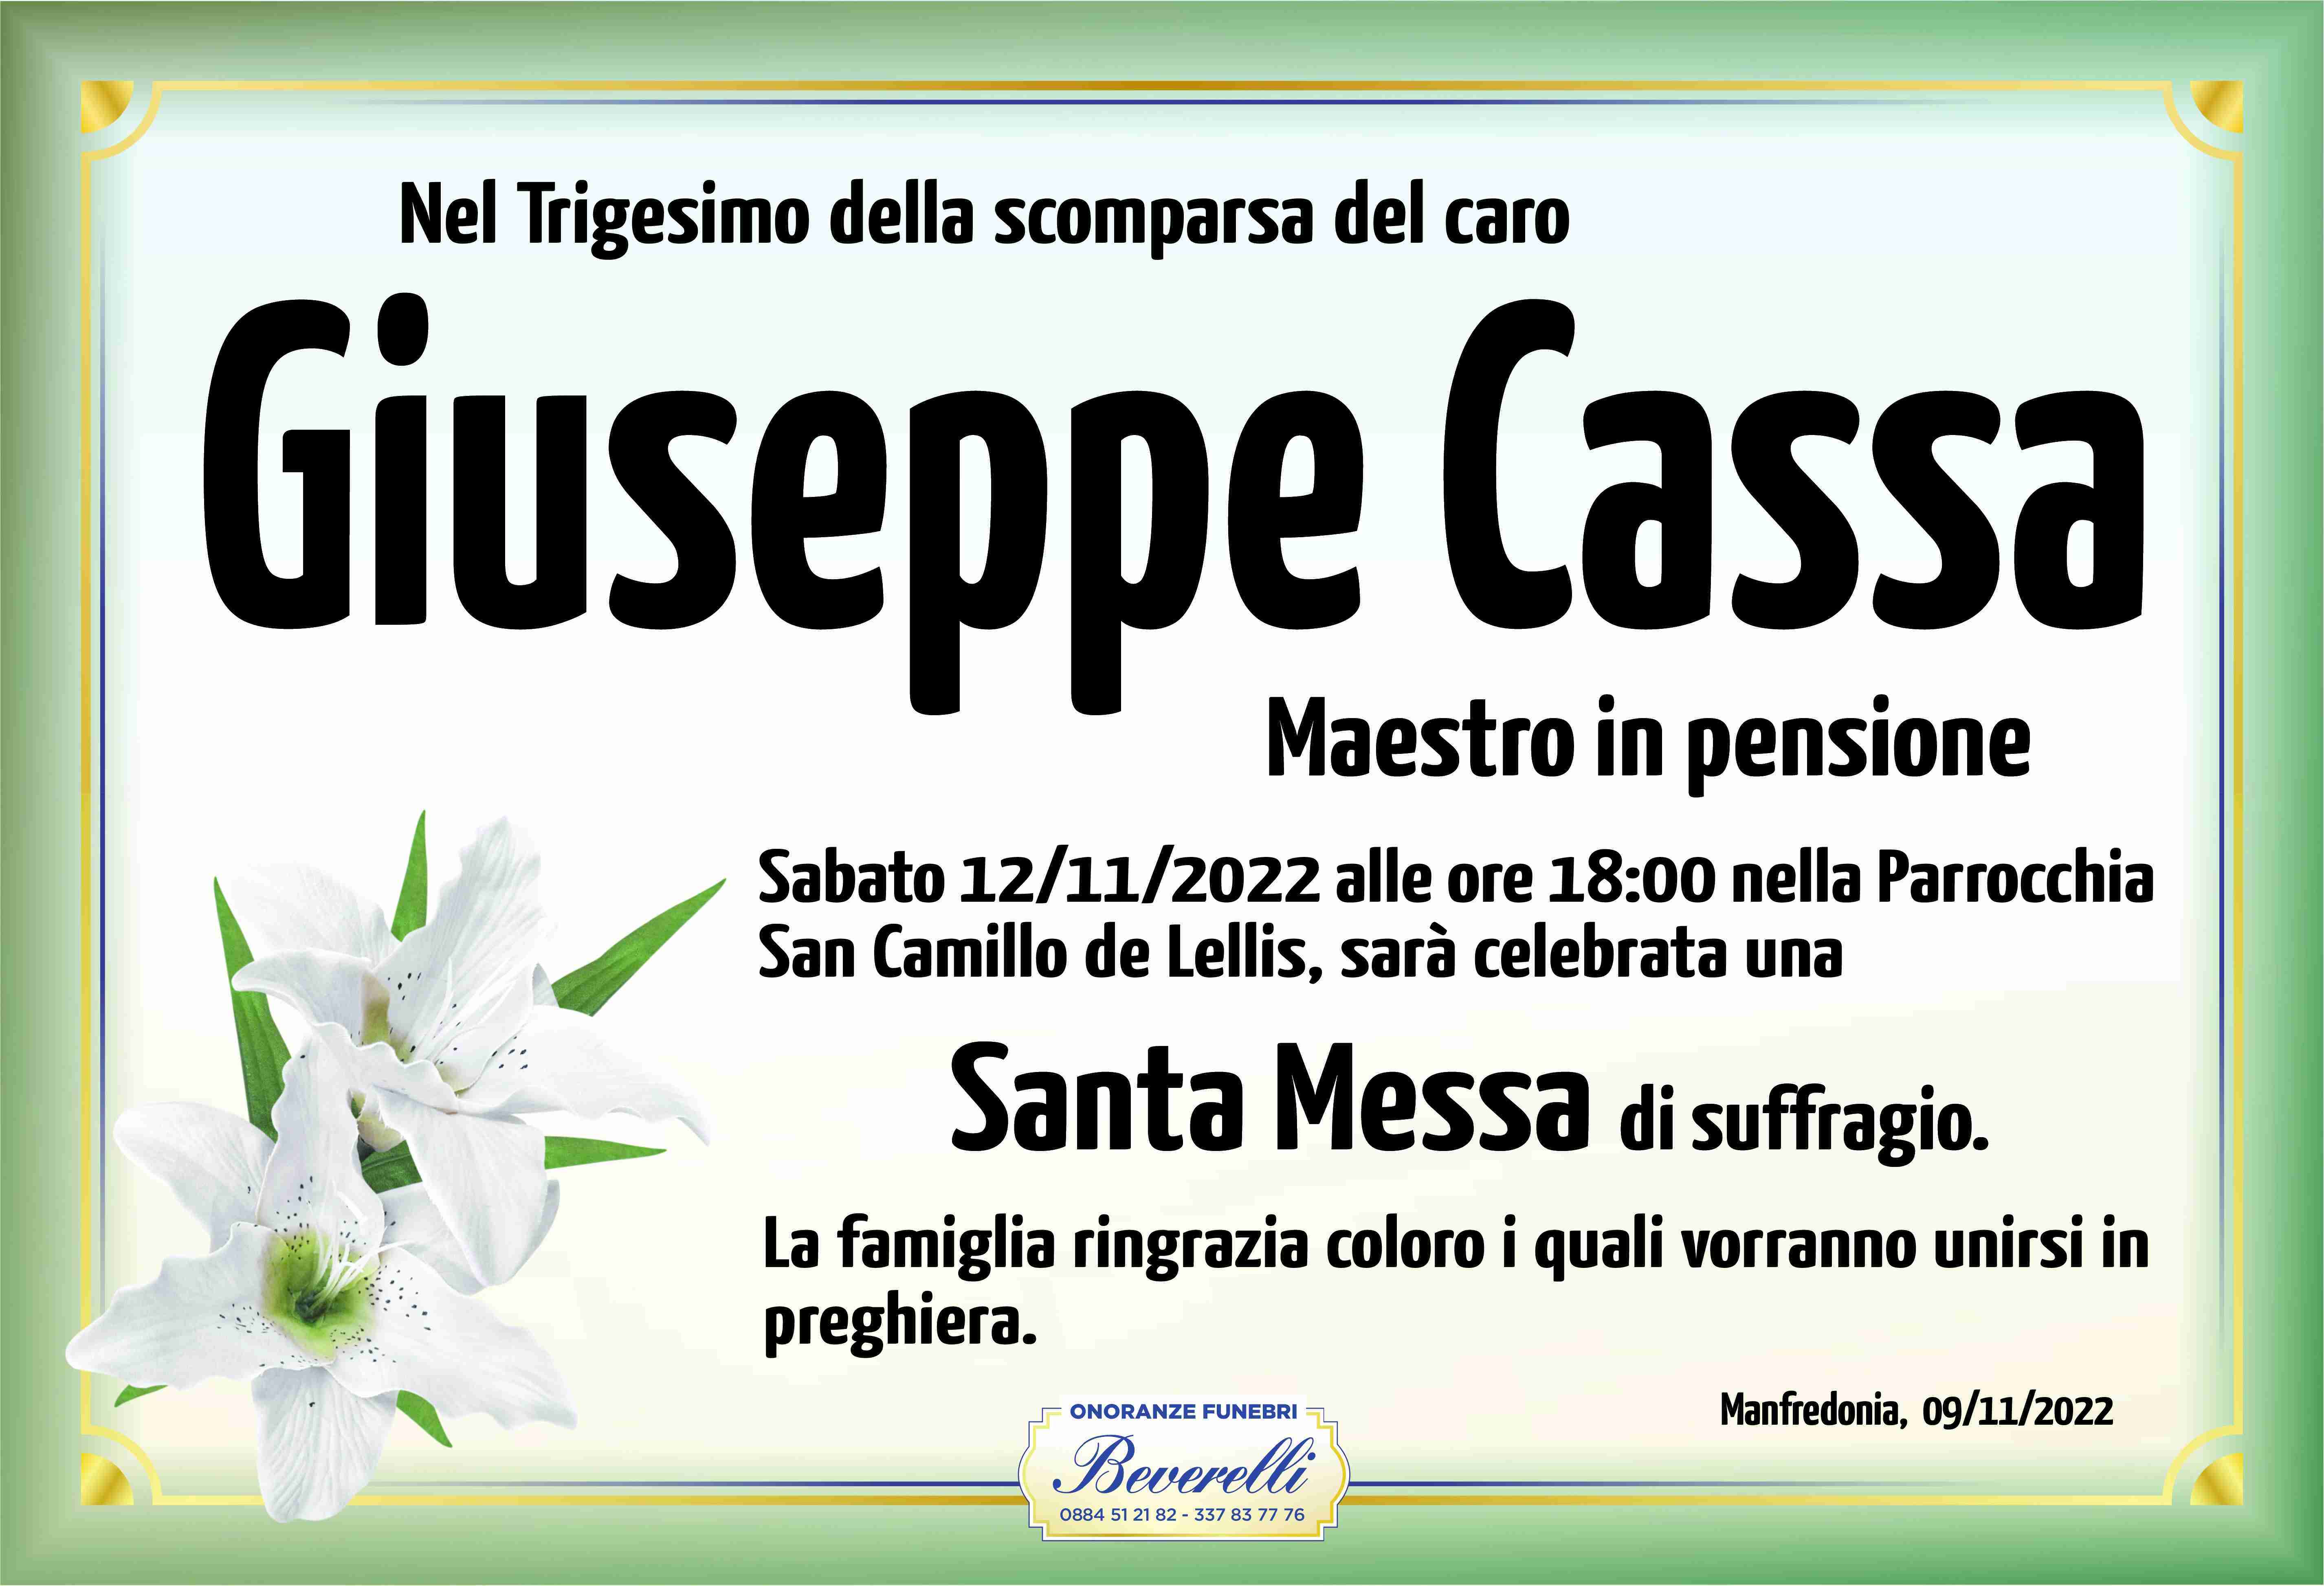 Giuseppe Cassa